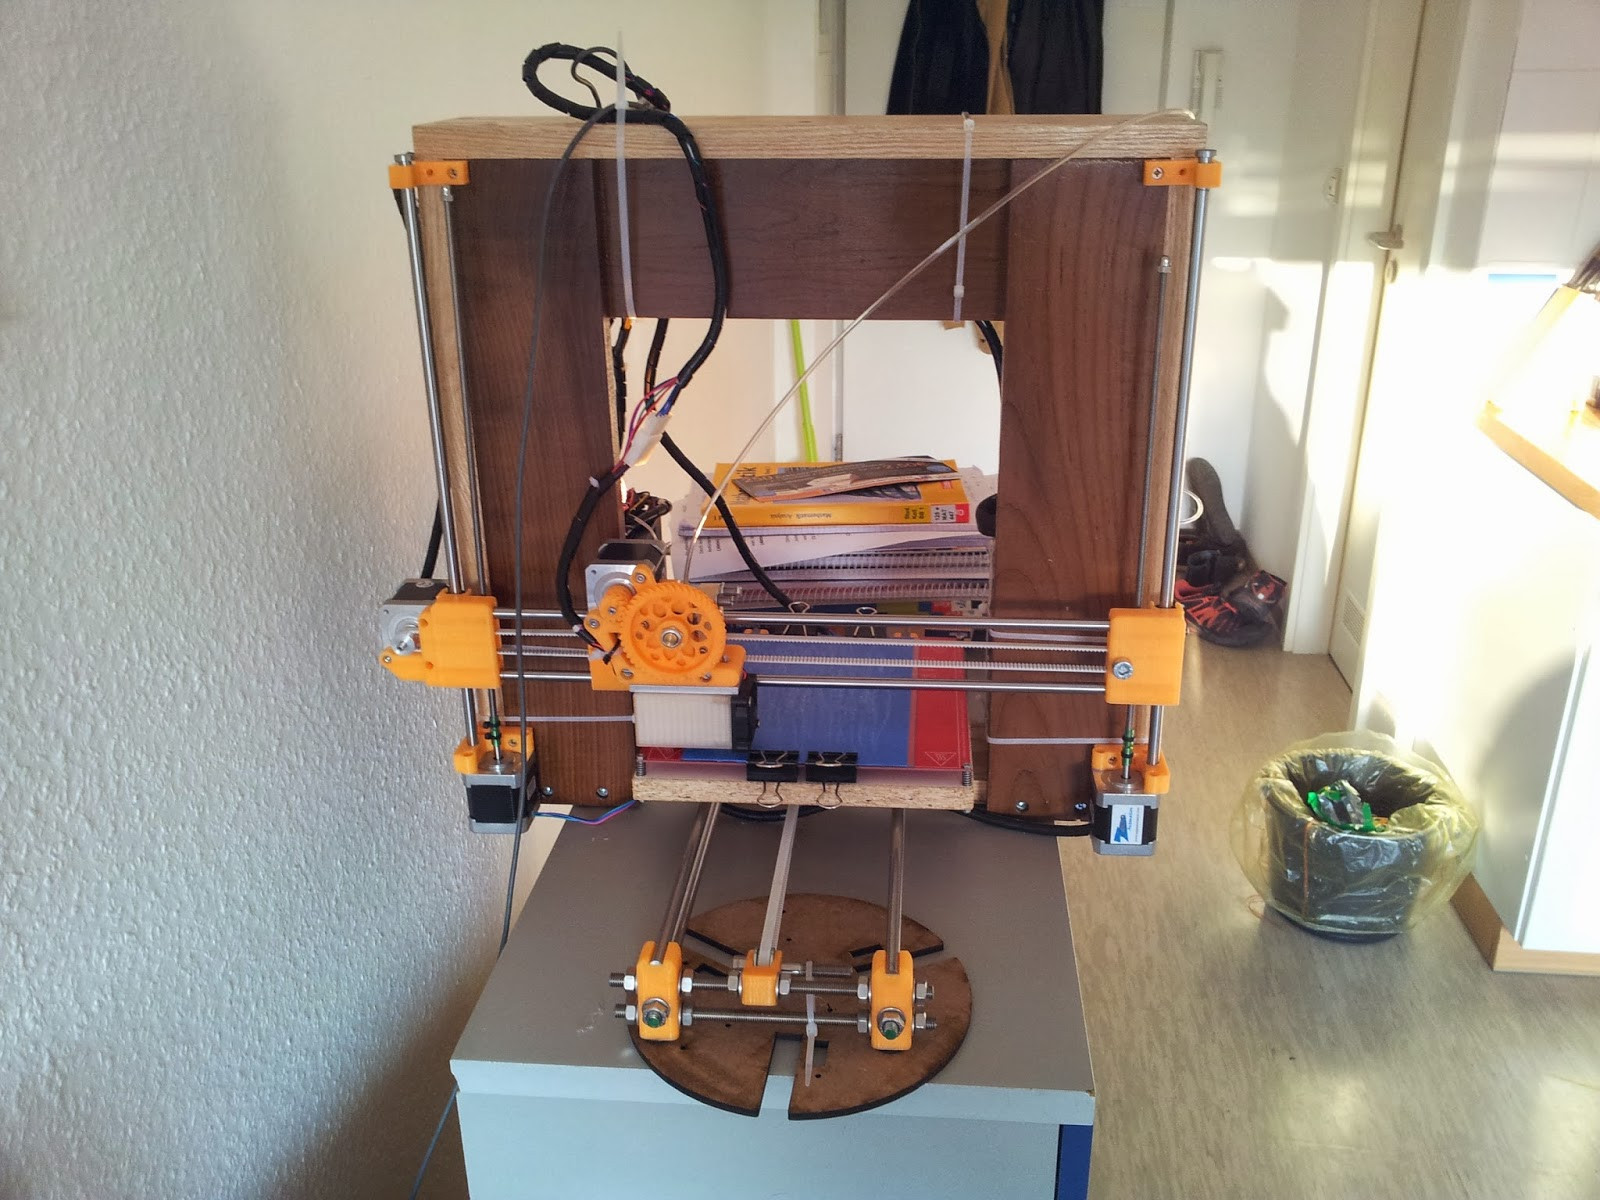 The Best Ideas for Diy 3d Printer Plans - Diy 3D Printer Plans Best Of Diy 3D Printing Diy 3D Printers MaDe From WooD Of Diy 3D Printer Plans